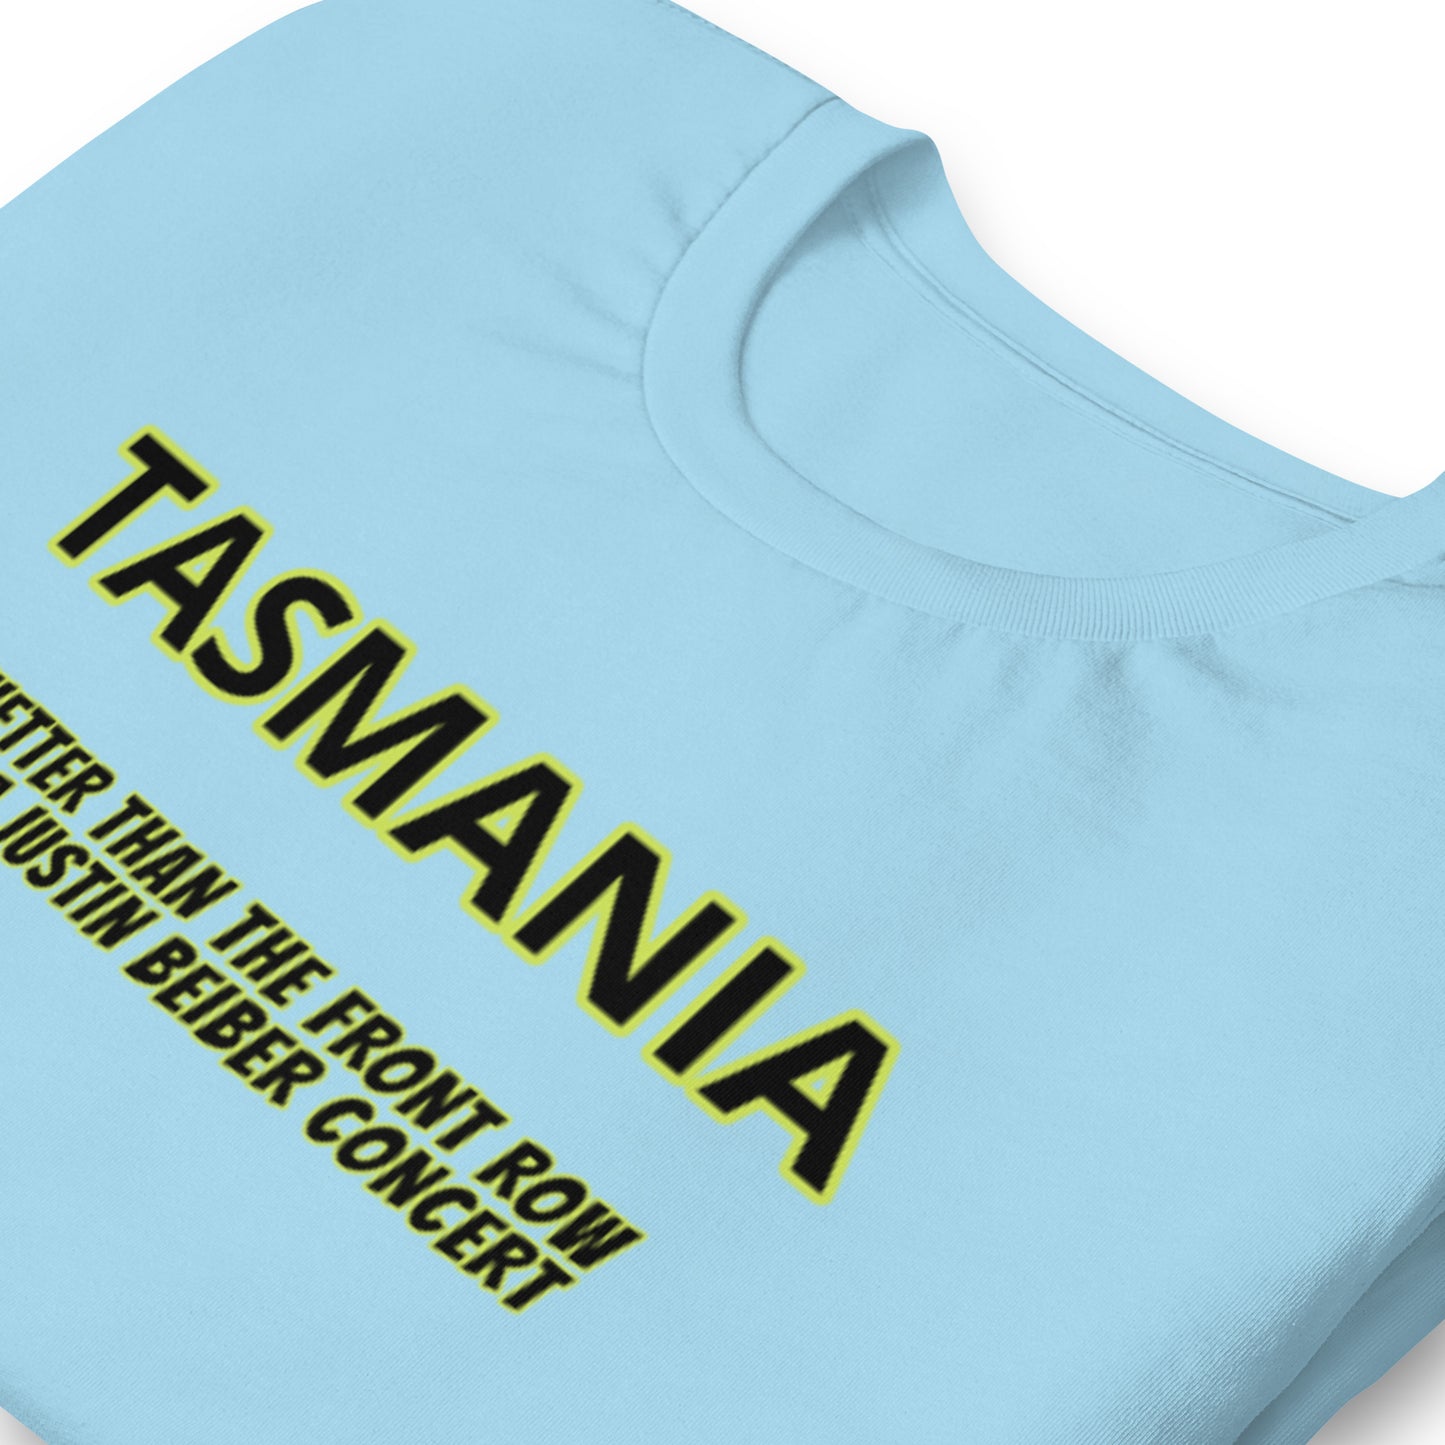 TASMANIA - VERY WET